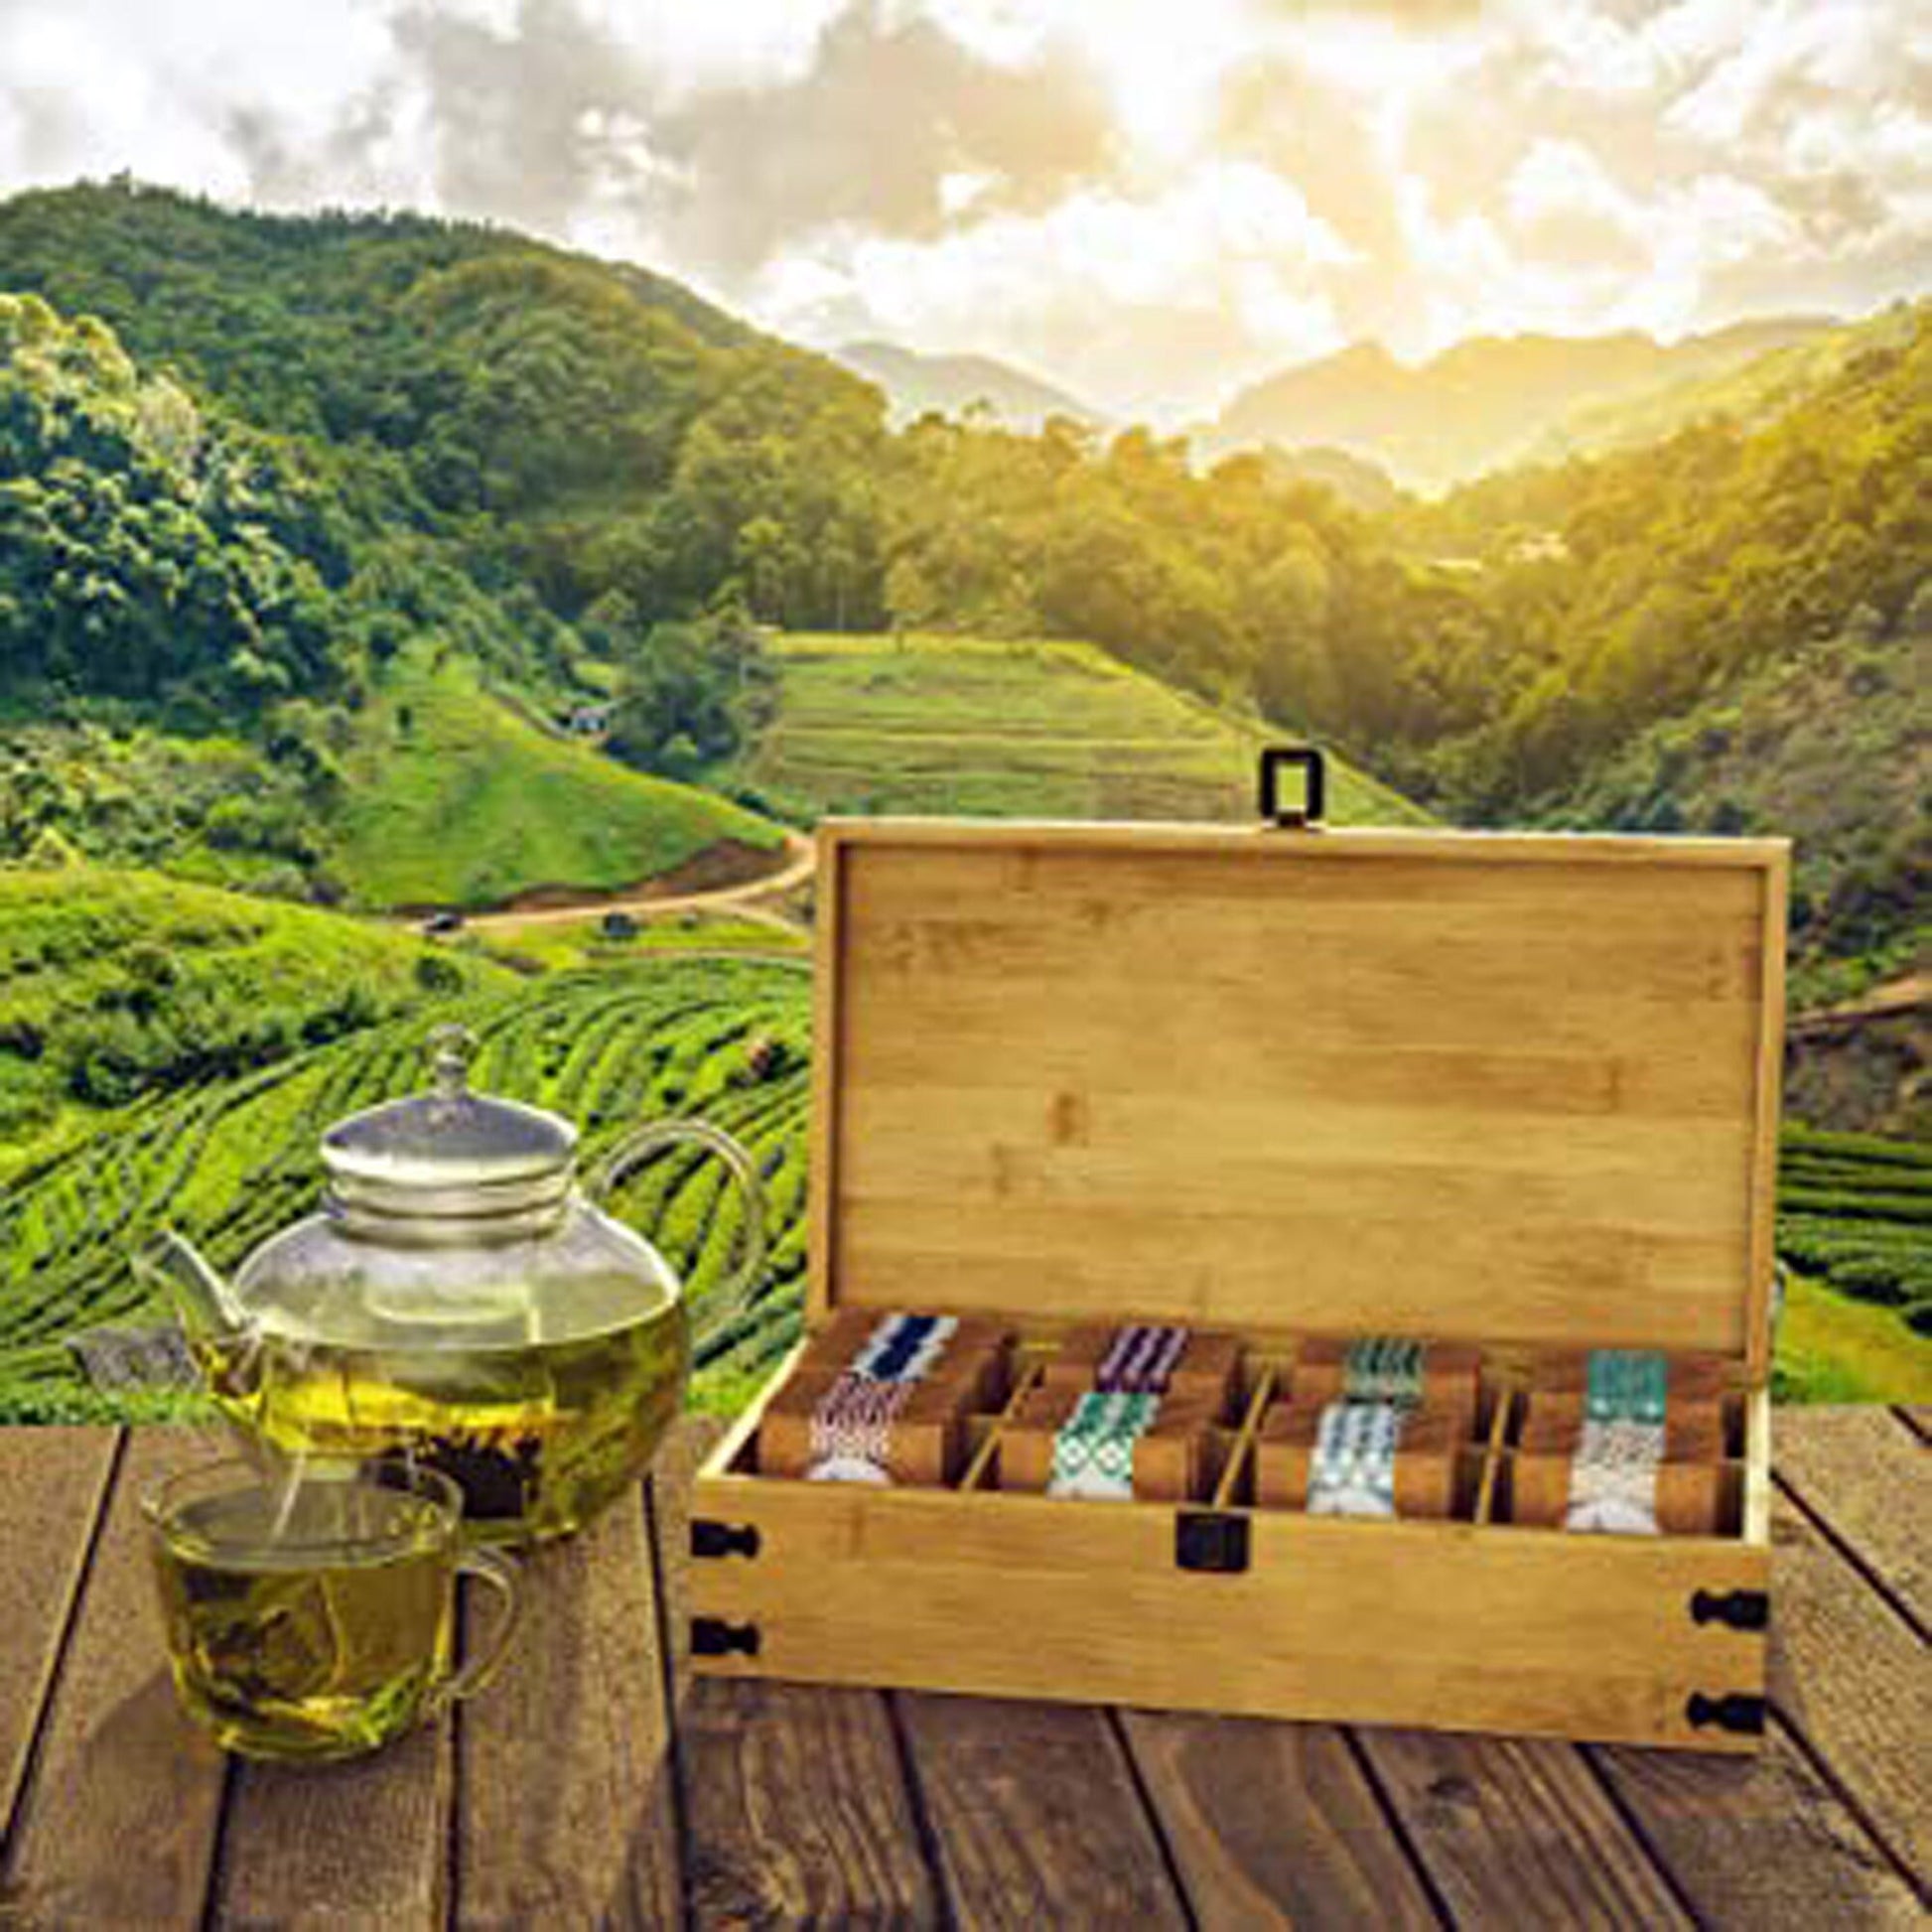 Southeast Asia Round Bamboo Tea Box Jar – RusticReach